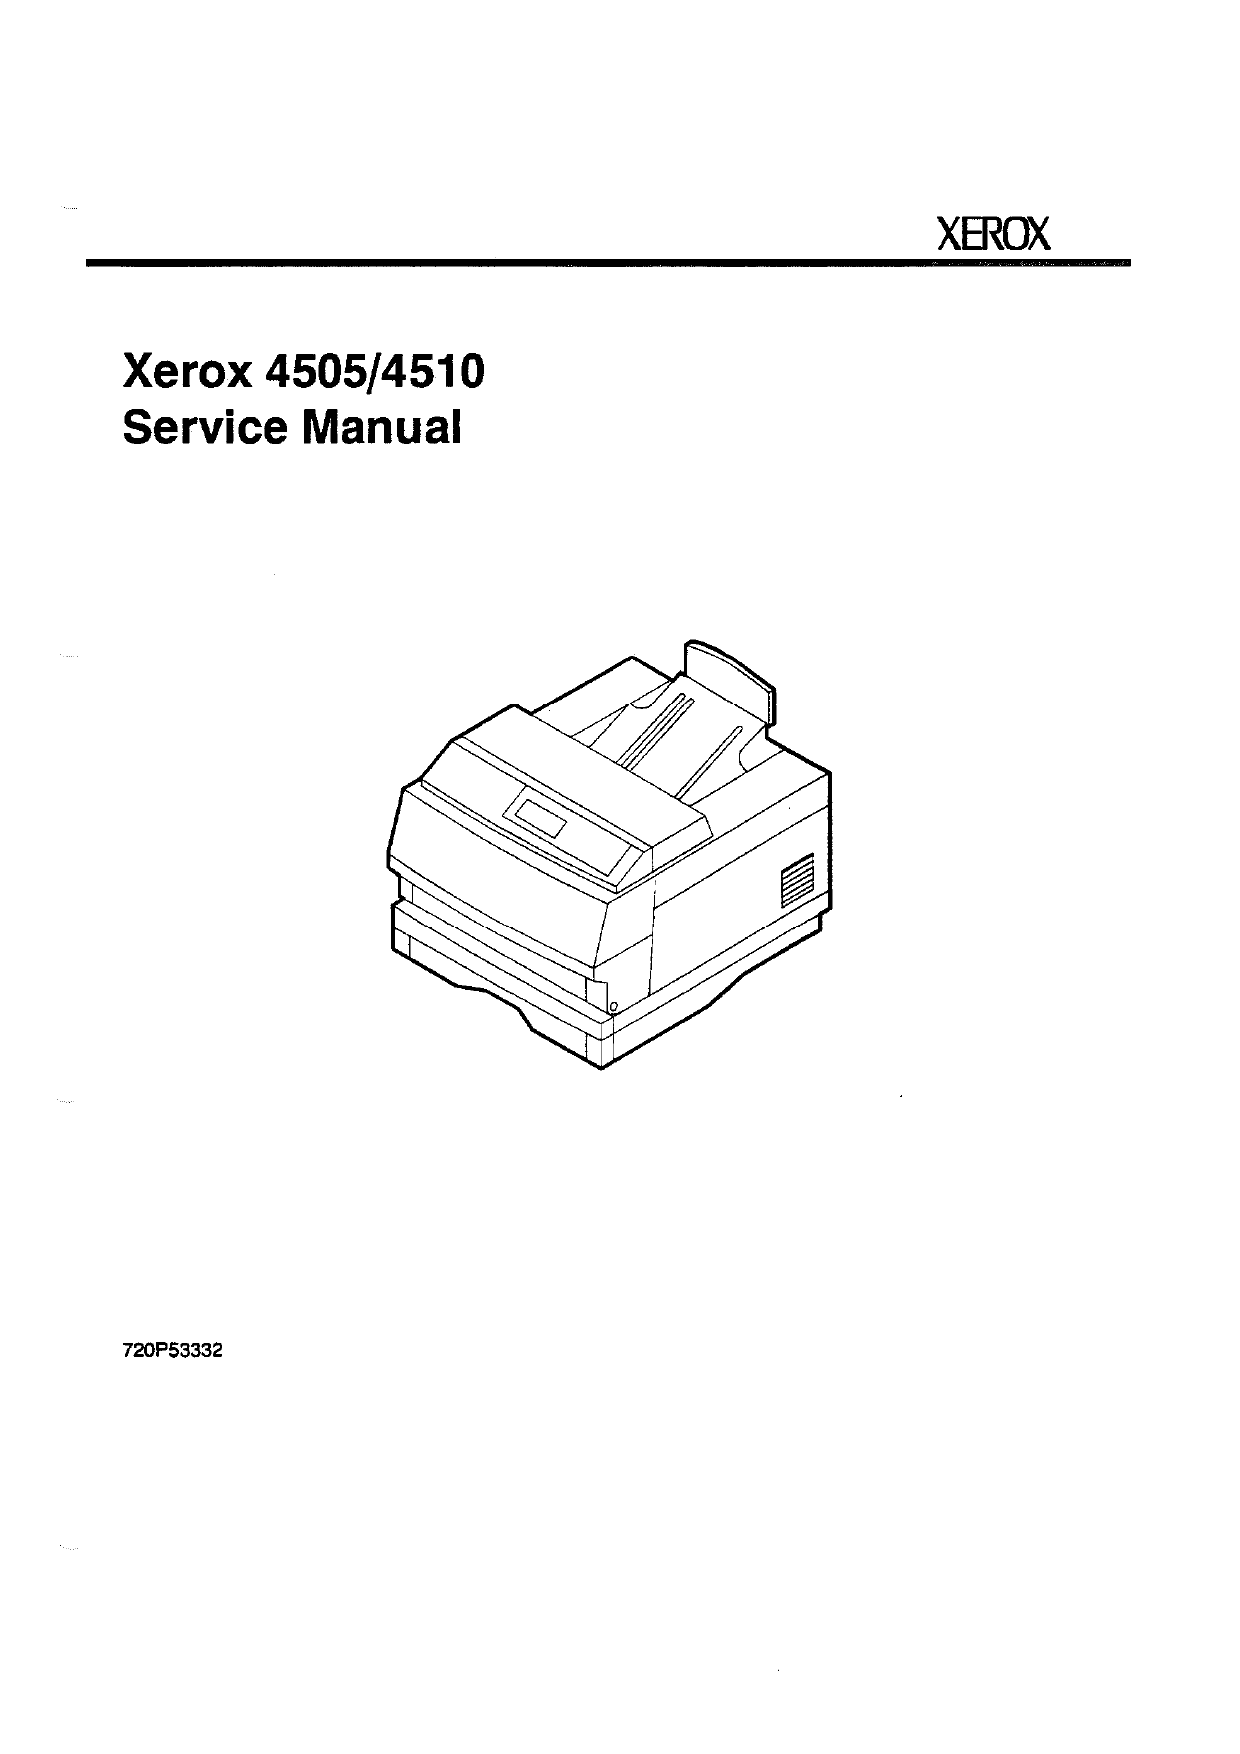 Xerox DocuPrint 4505 4510 Parts List and Service Manual-1